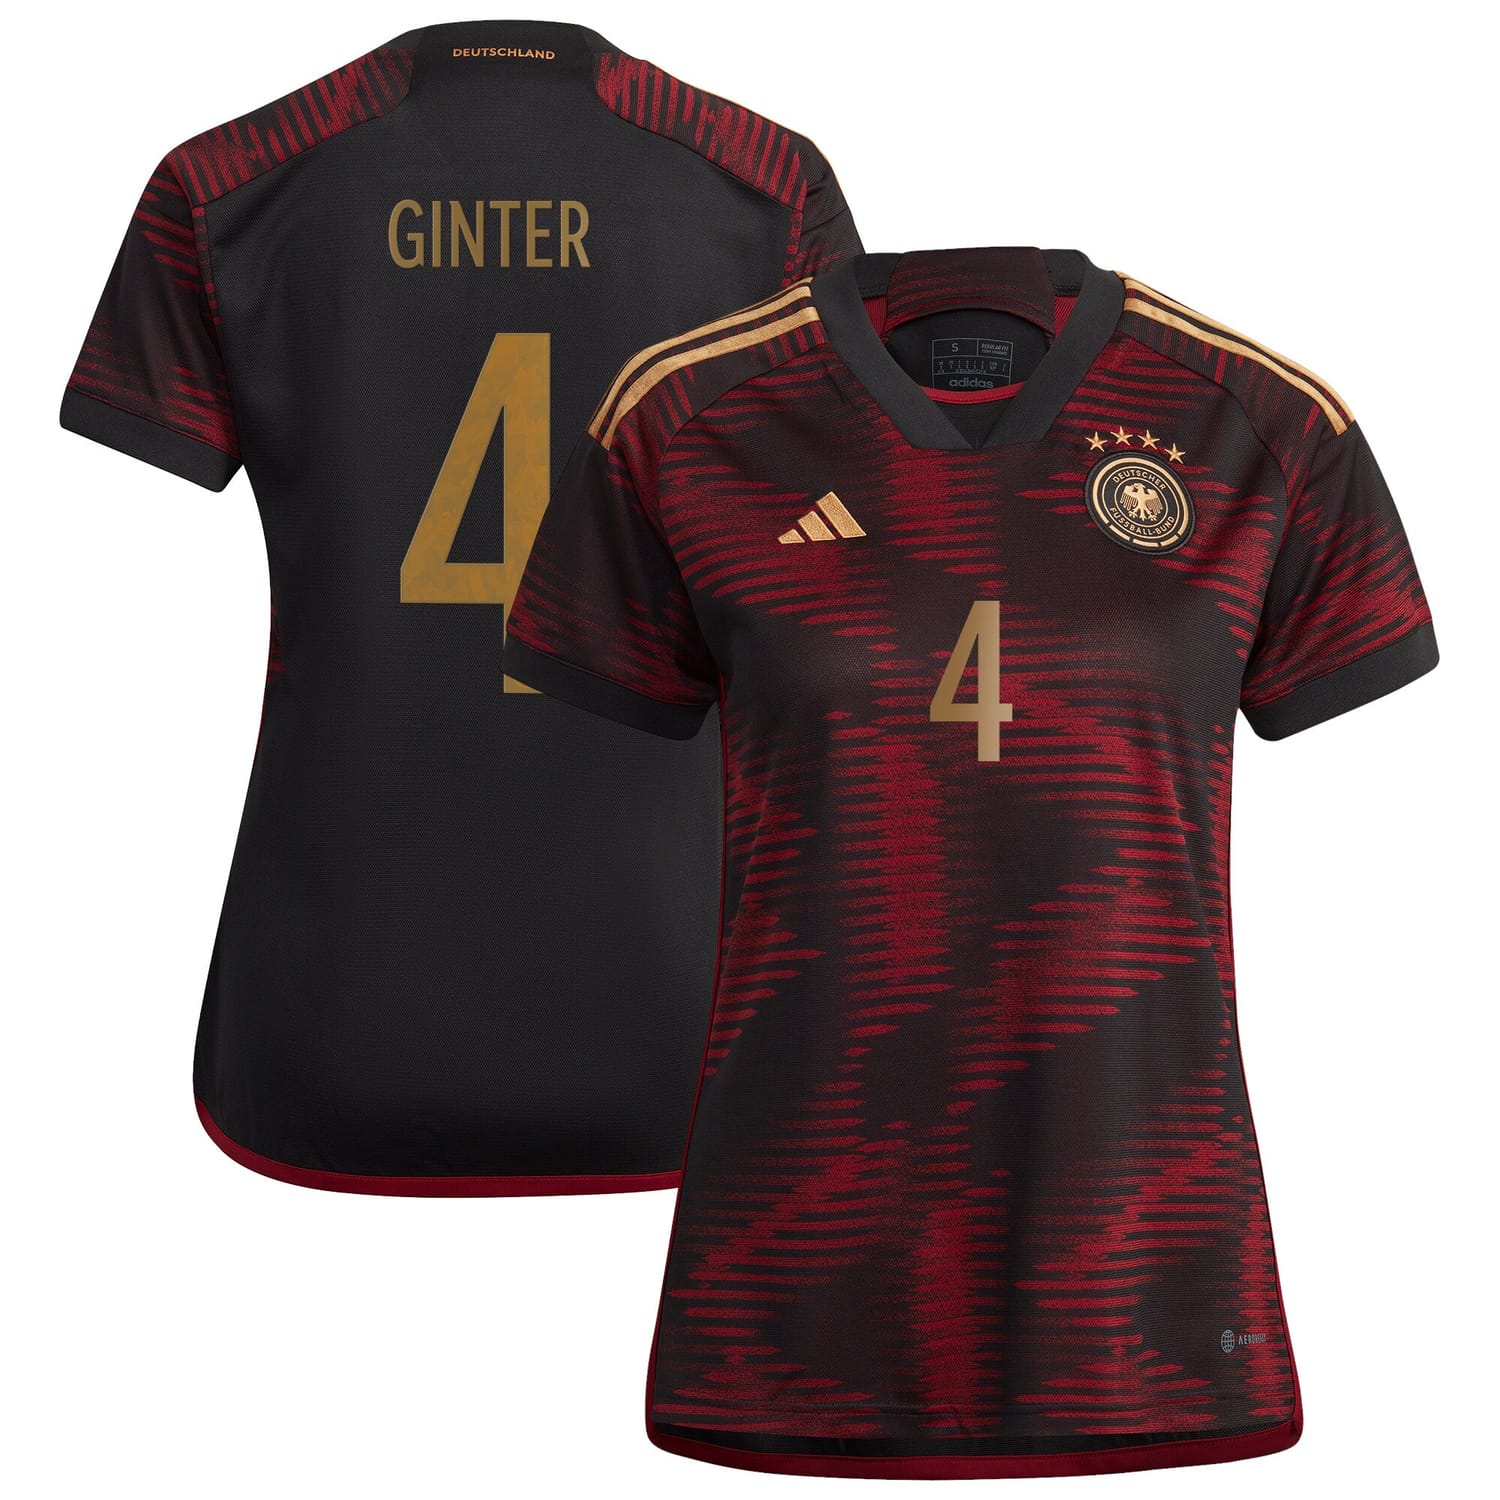 Germany National Team Away Jersey Shirt player Matthias Ginter 4 printing for Women